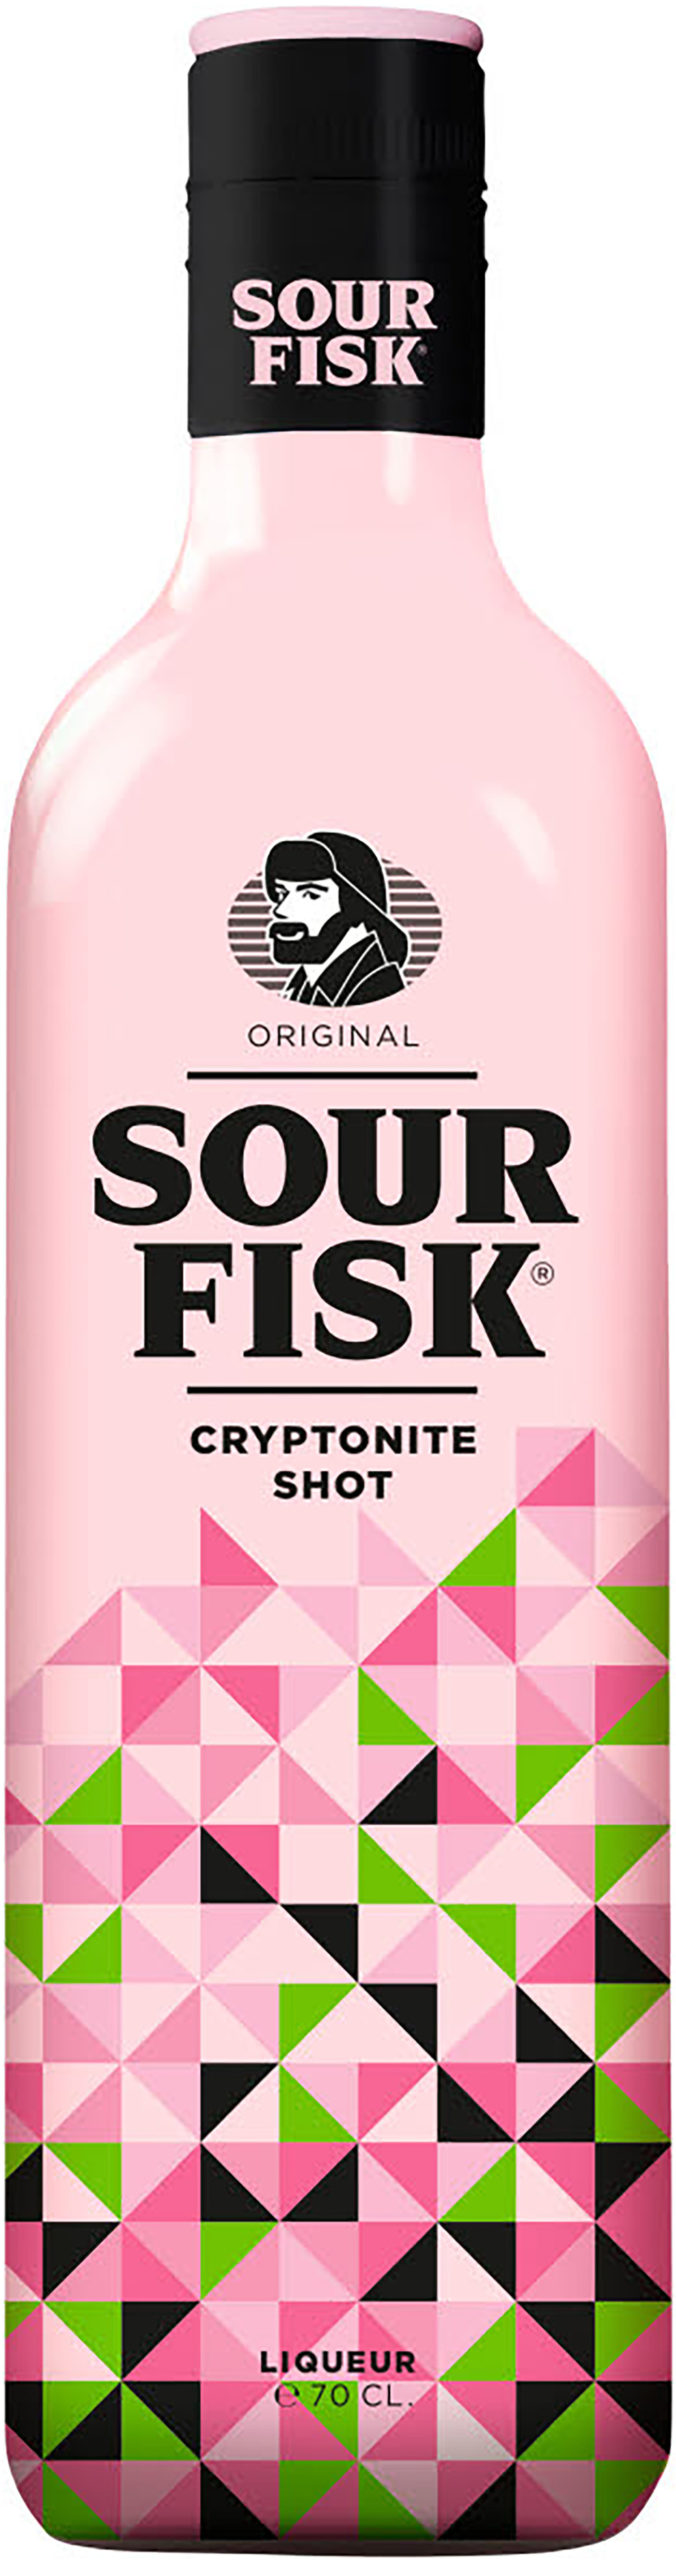 Sour Fisk Cryptonite